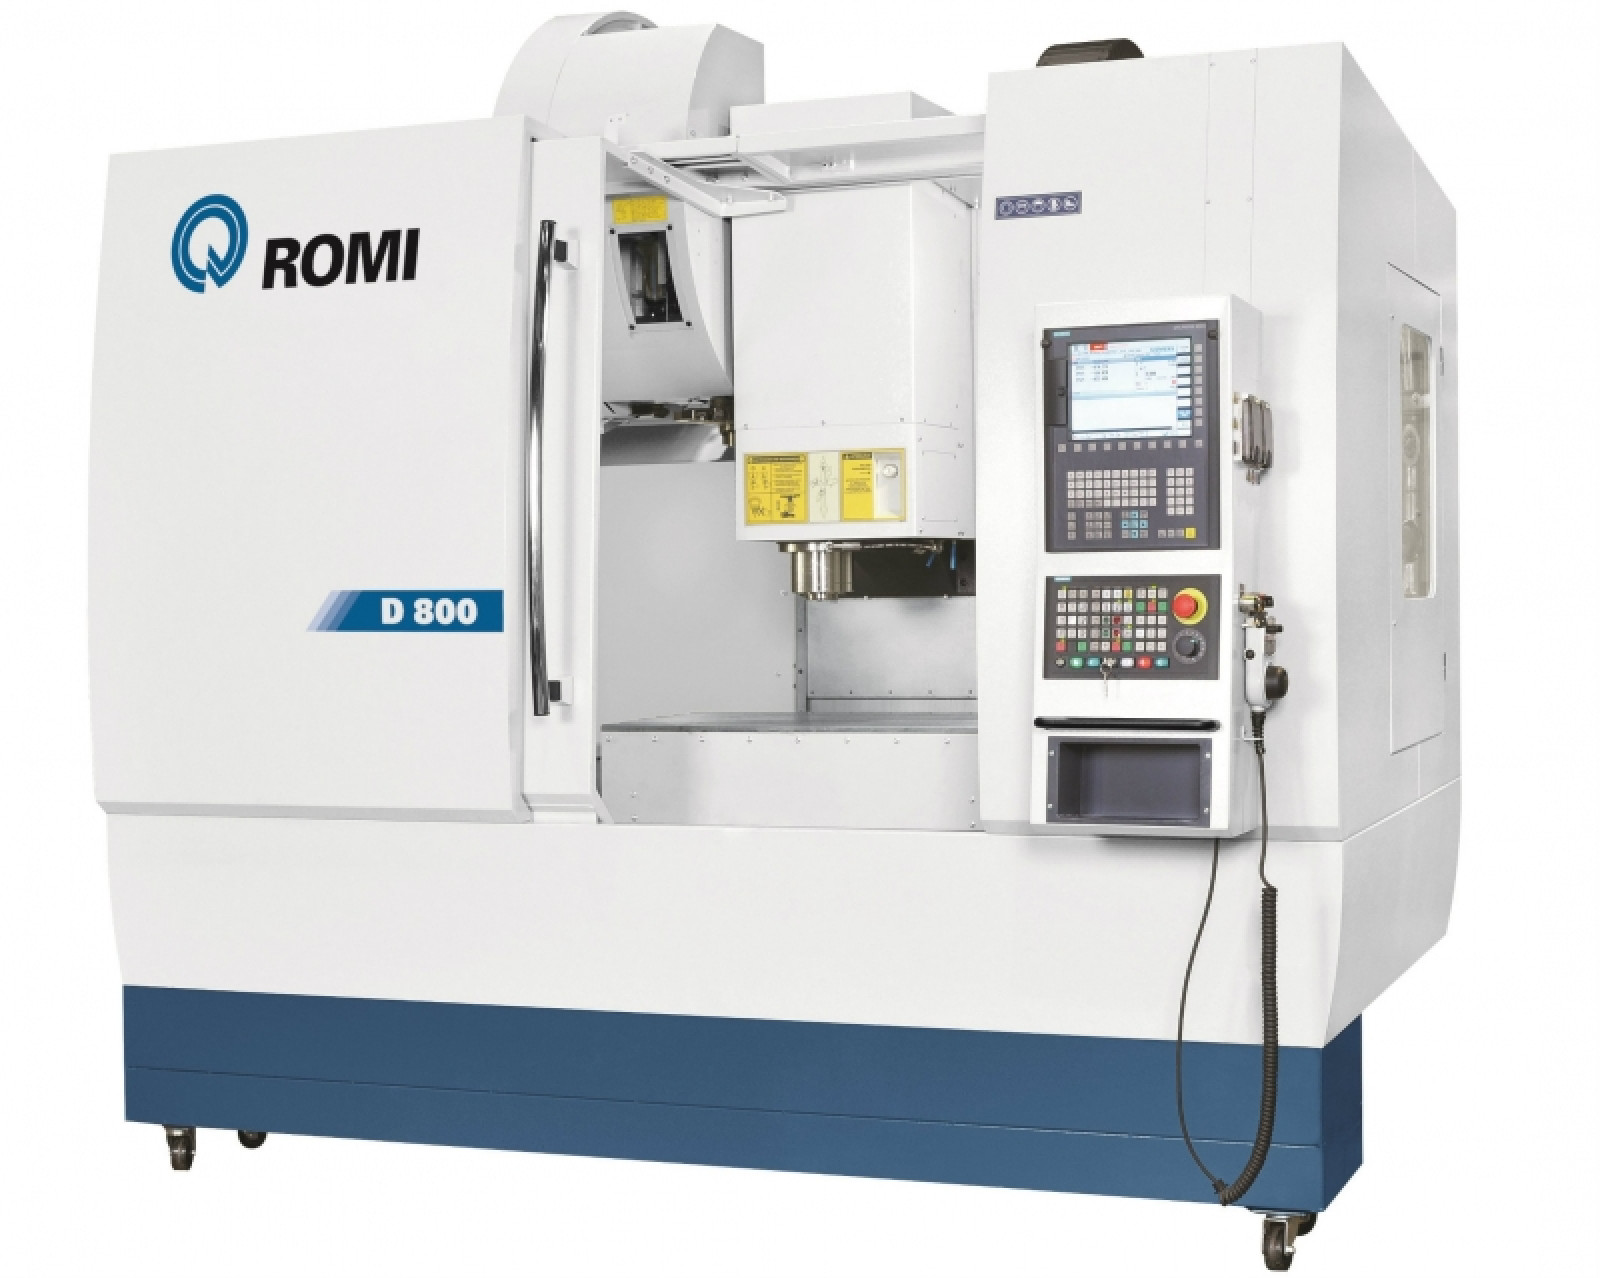 Romi Forge CAD/CAM Partnership